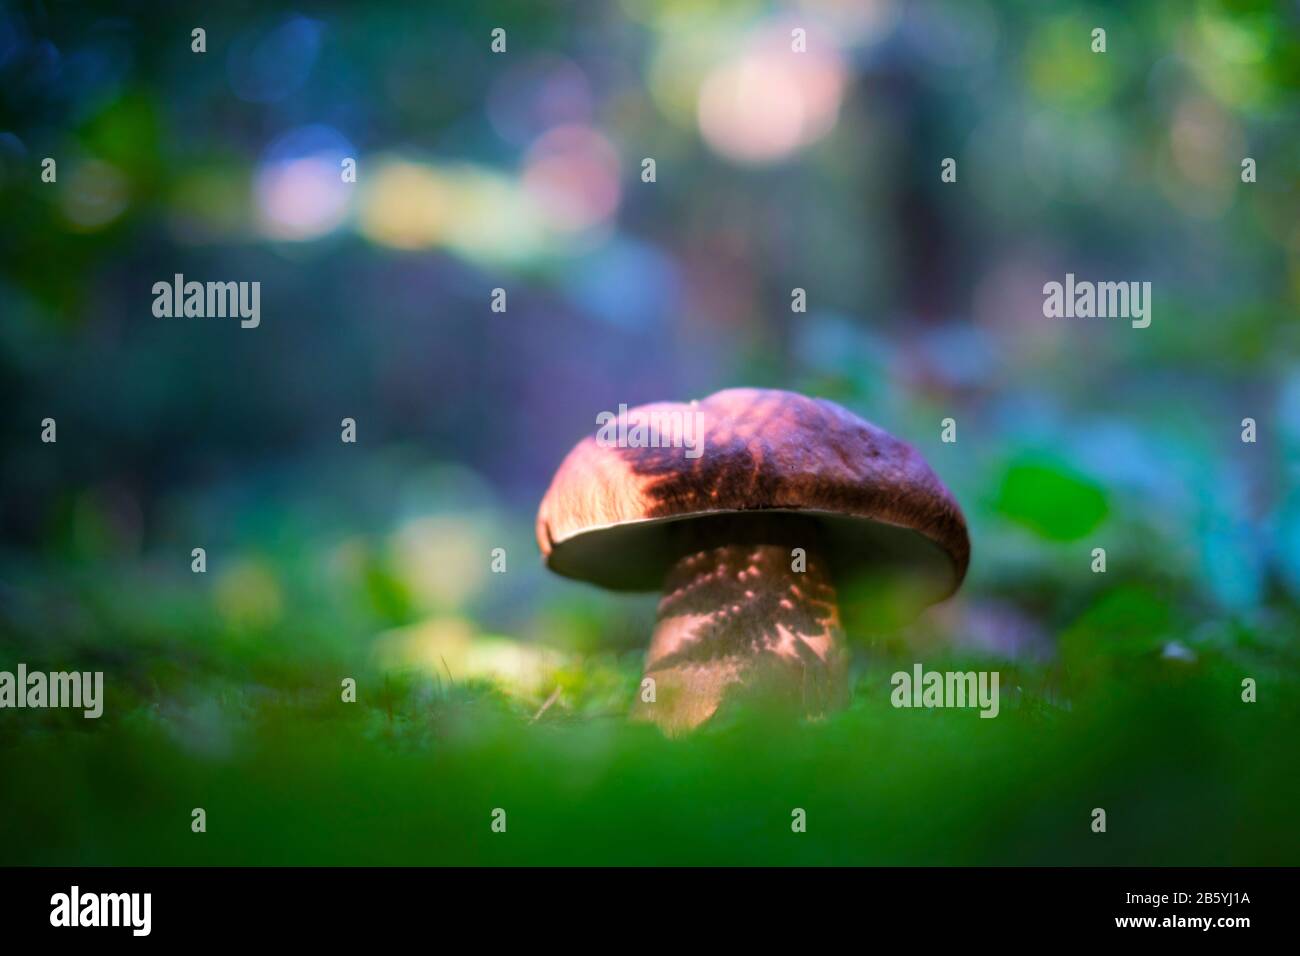 Big White mushroom im Sommer Wald. Natur Landschaft Fotografie Stockfoto